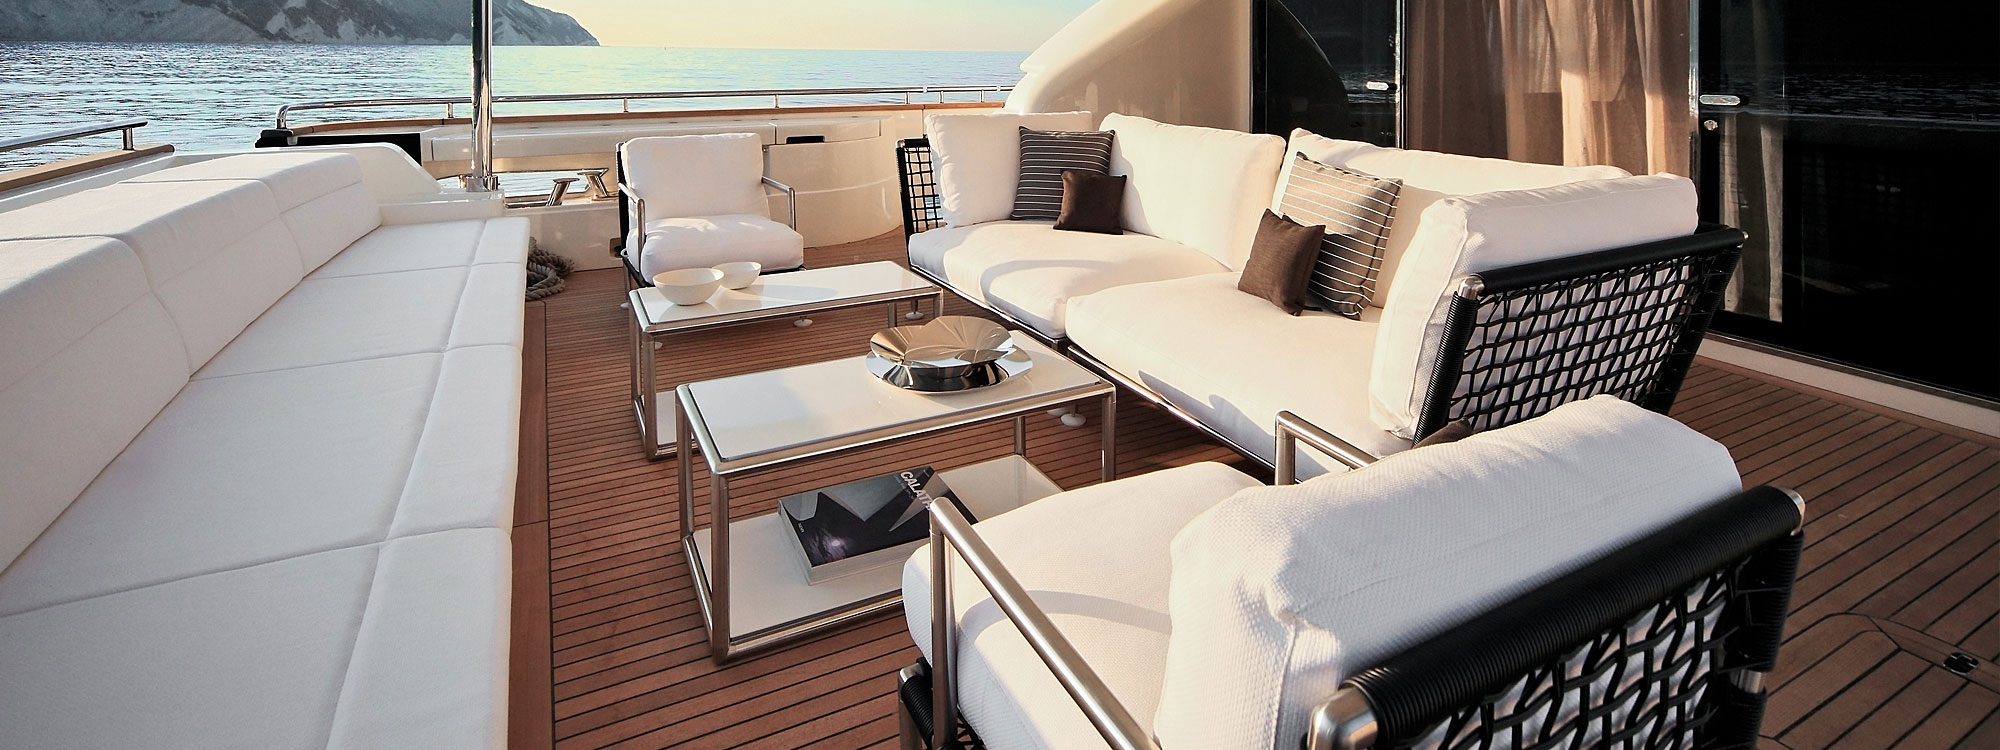 Coro Nest luxury yacht furniture on aft deck of super yacht.